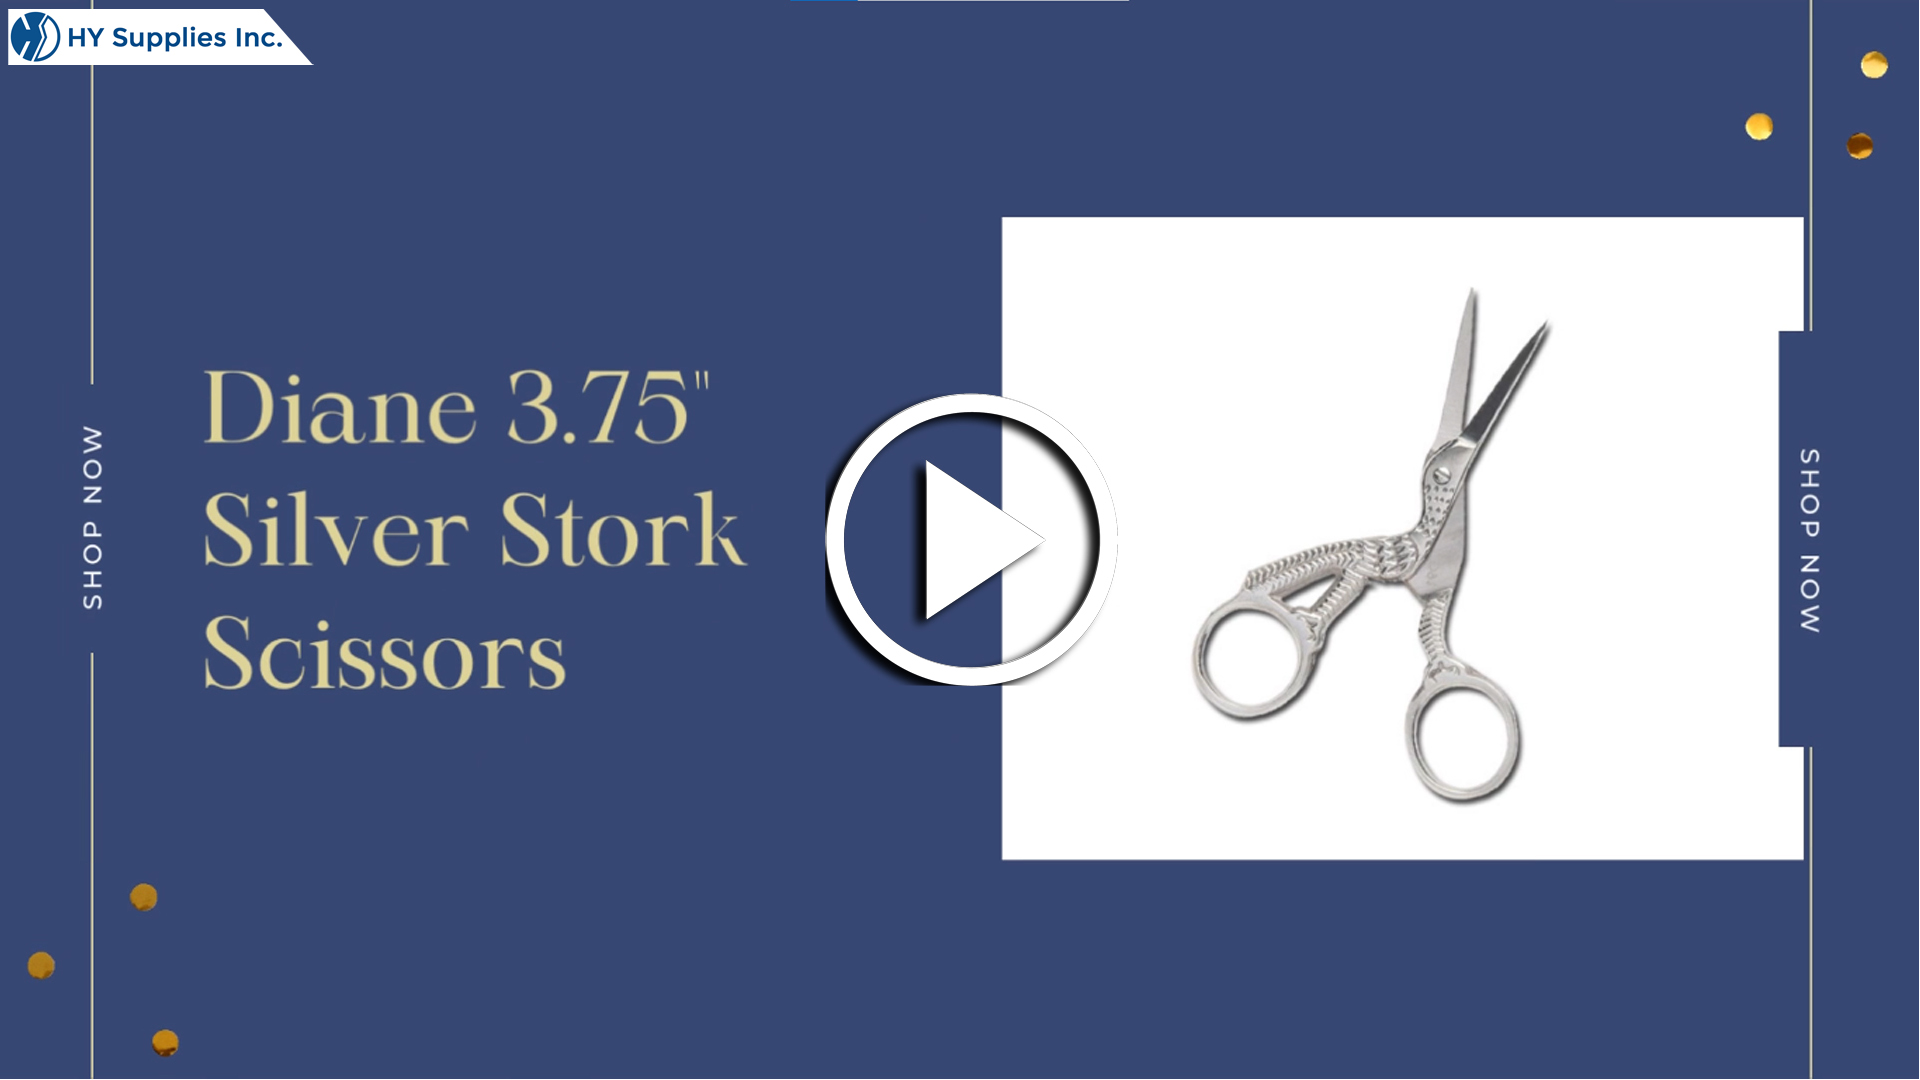 Diane 3.75" Silver Stork Scissors